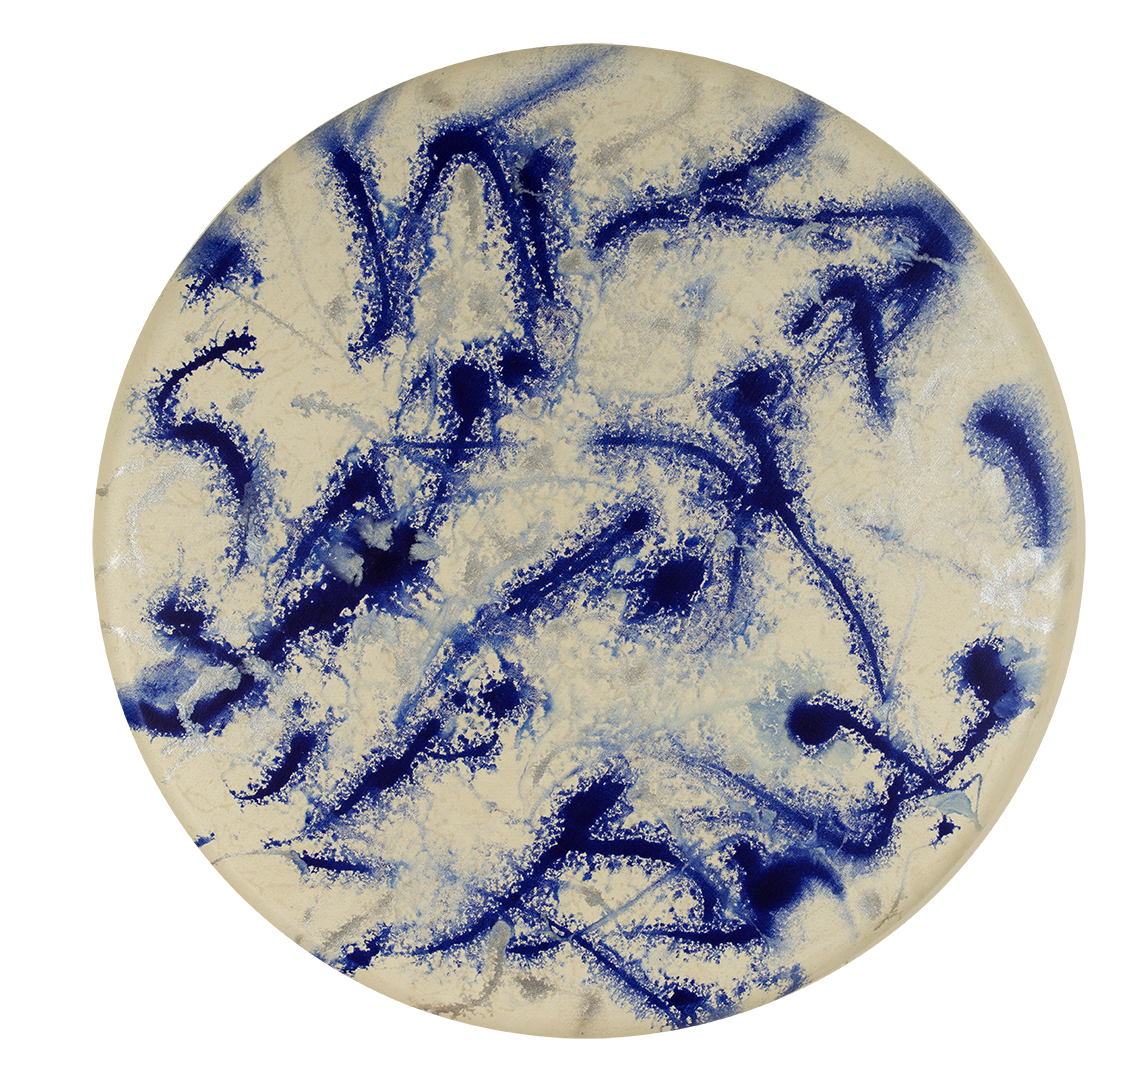 ©2020 Alicia R Peterson, *Blue Silver Microscopic*. Acrylic on 30-inch diameter convex canvas. Photographer: Peter Scheer.